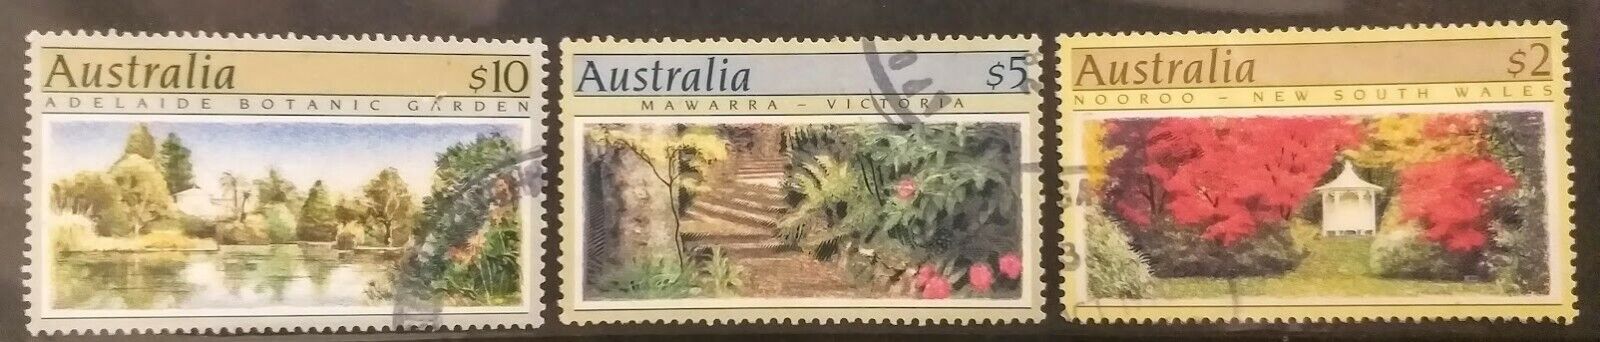 Australia 1989 - 90 Low price Botanic Gardens Dollar Max 54% OFF Go Set 3 Stamps x